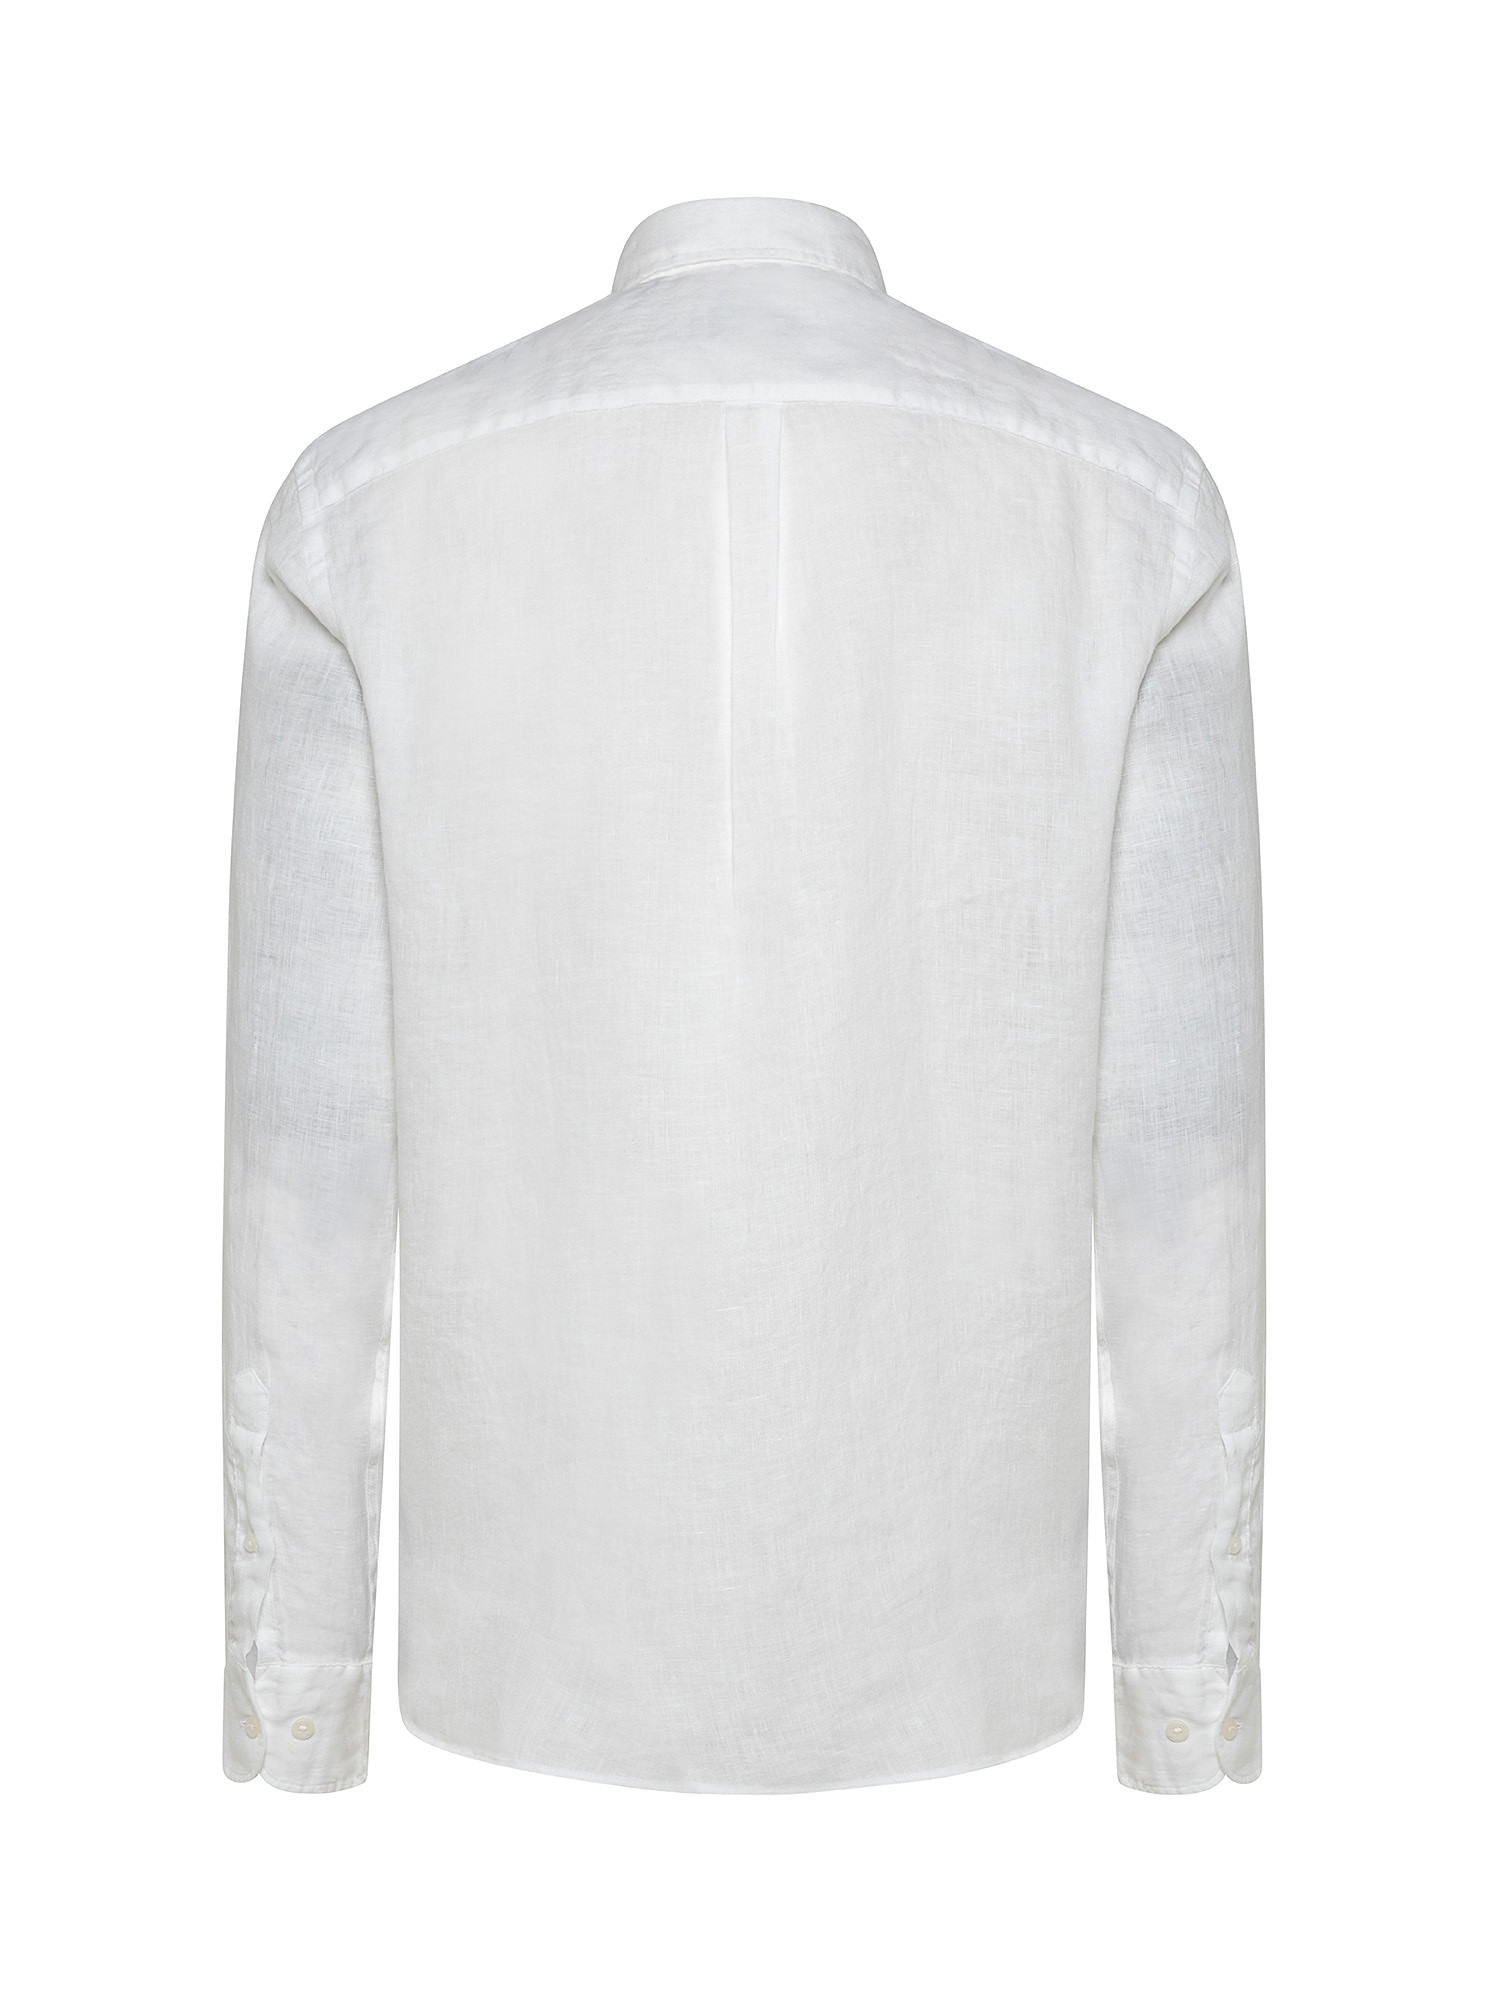 Linen shirt, White, large image number 1